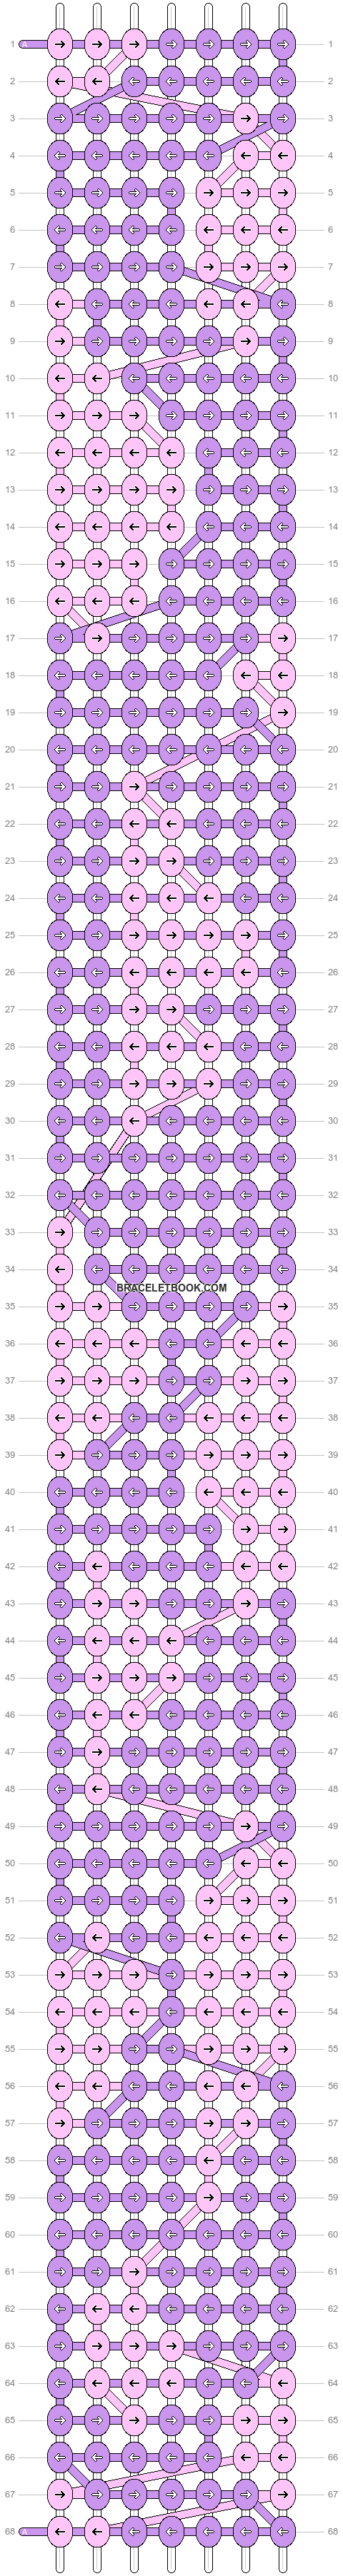 Alpha pattern #1654 variation #18472 pattern